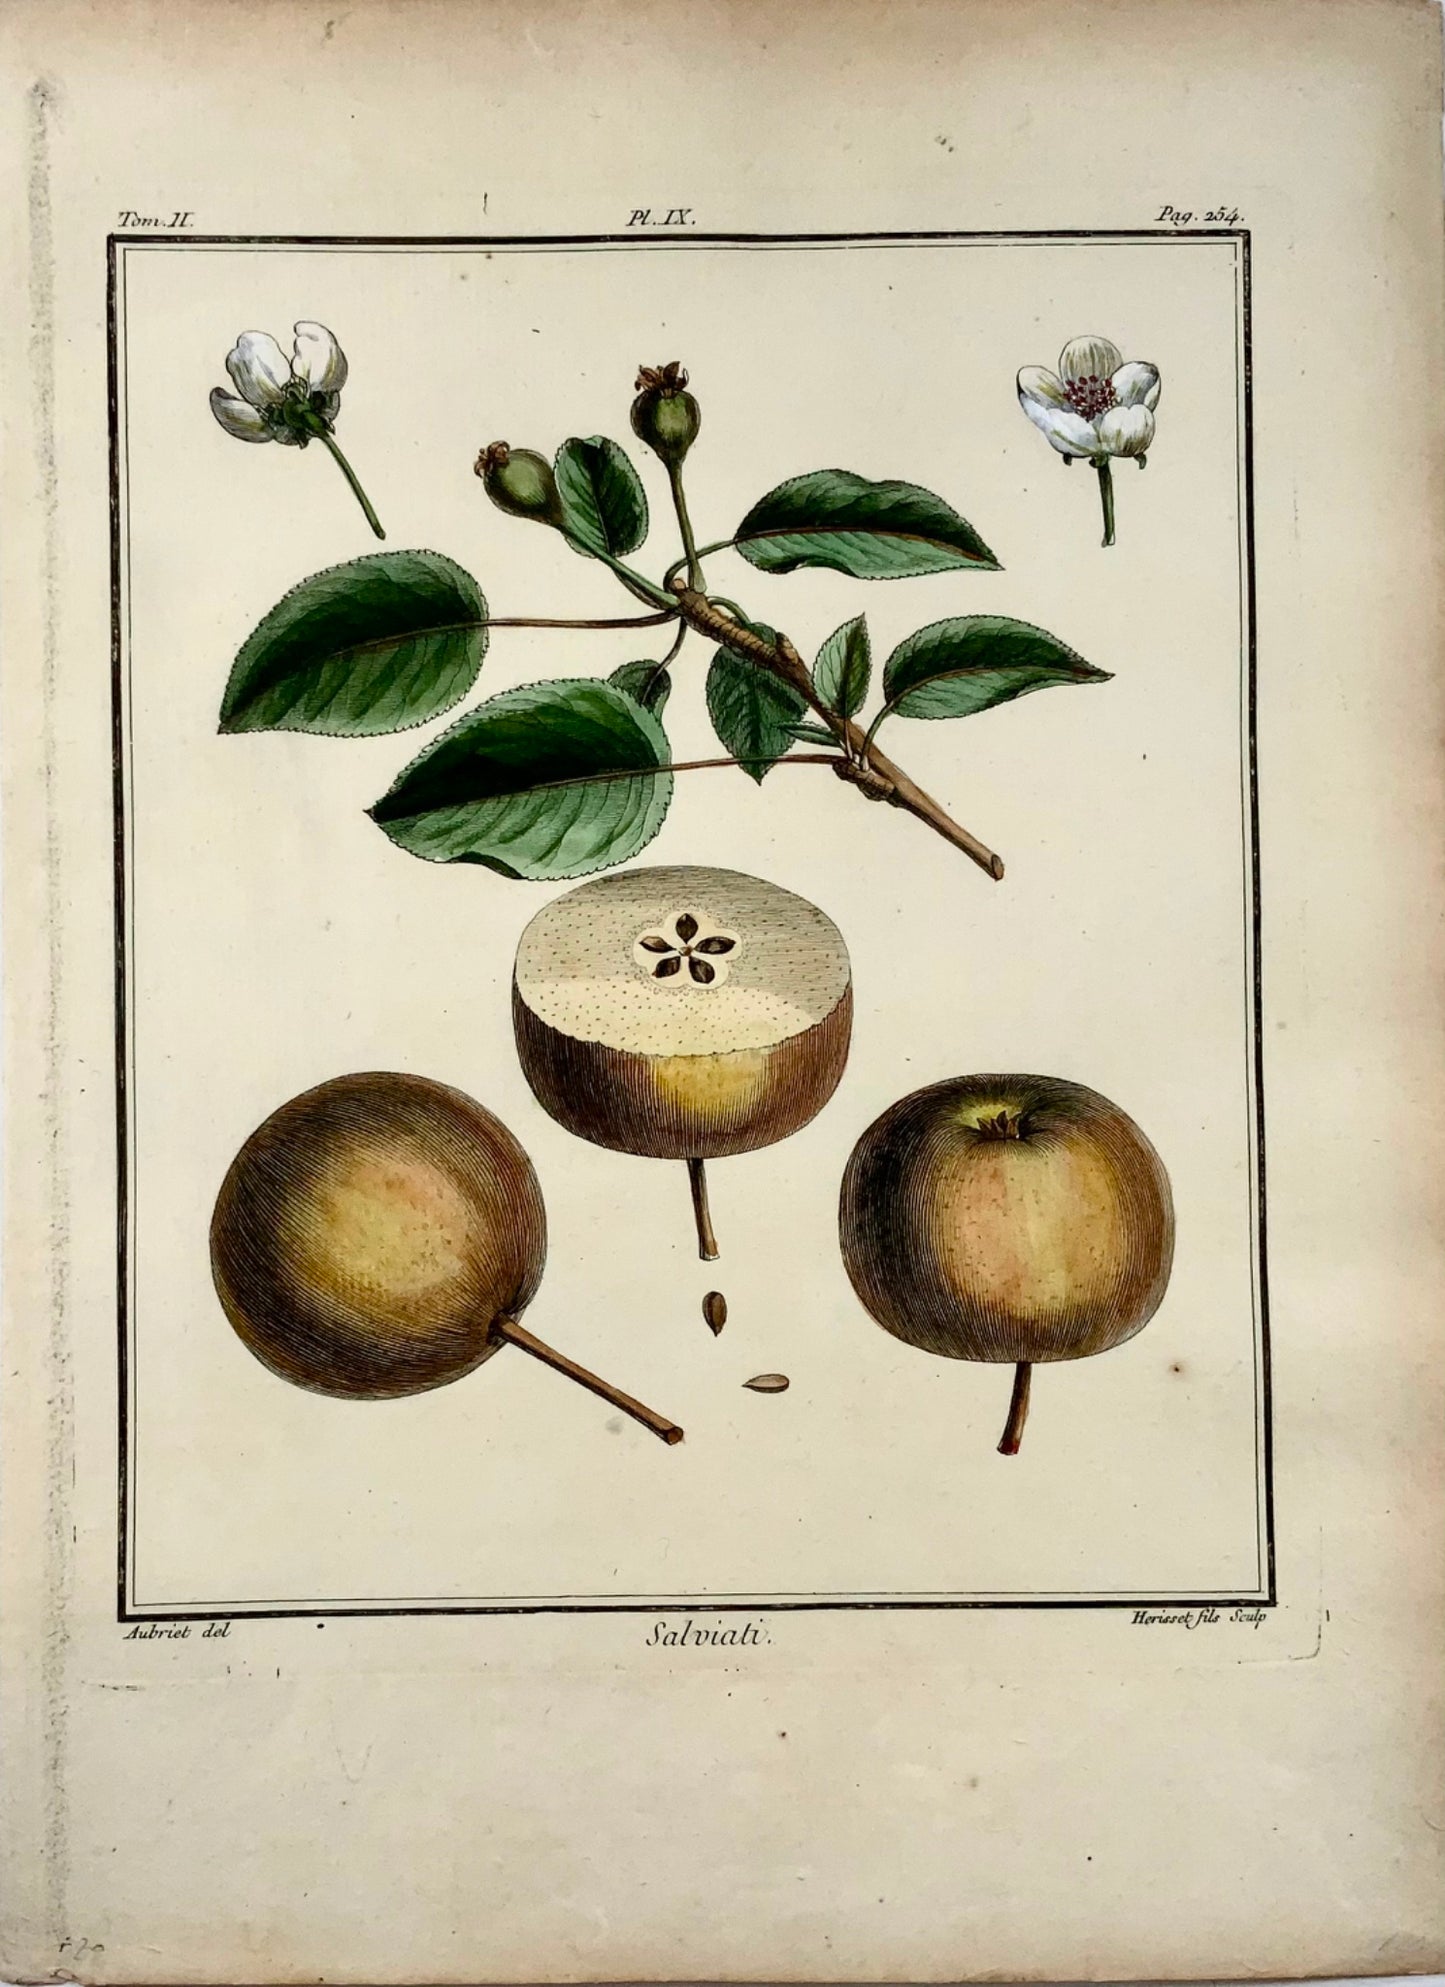 1768 Pera, frutta, Duhamel du Monceau, quarto grande, colore a mano, 